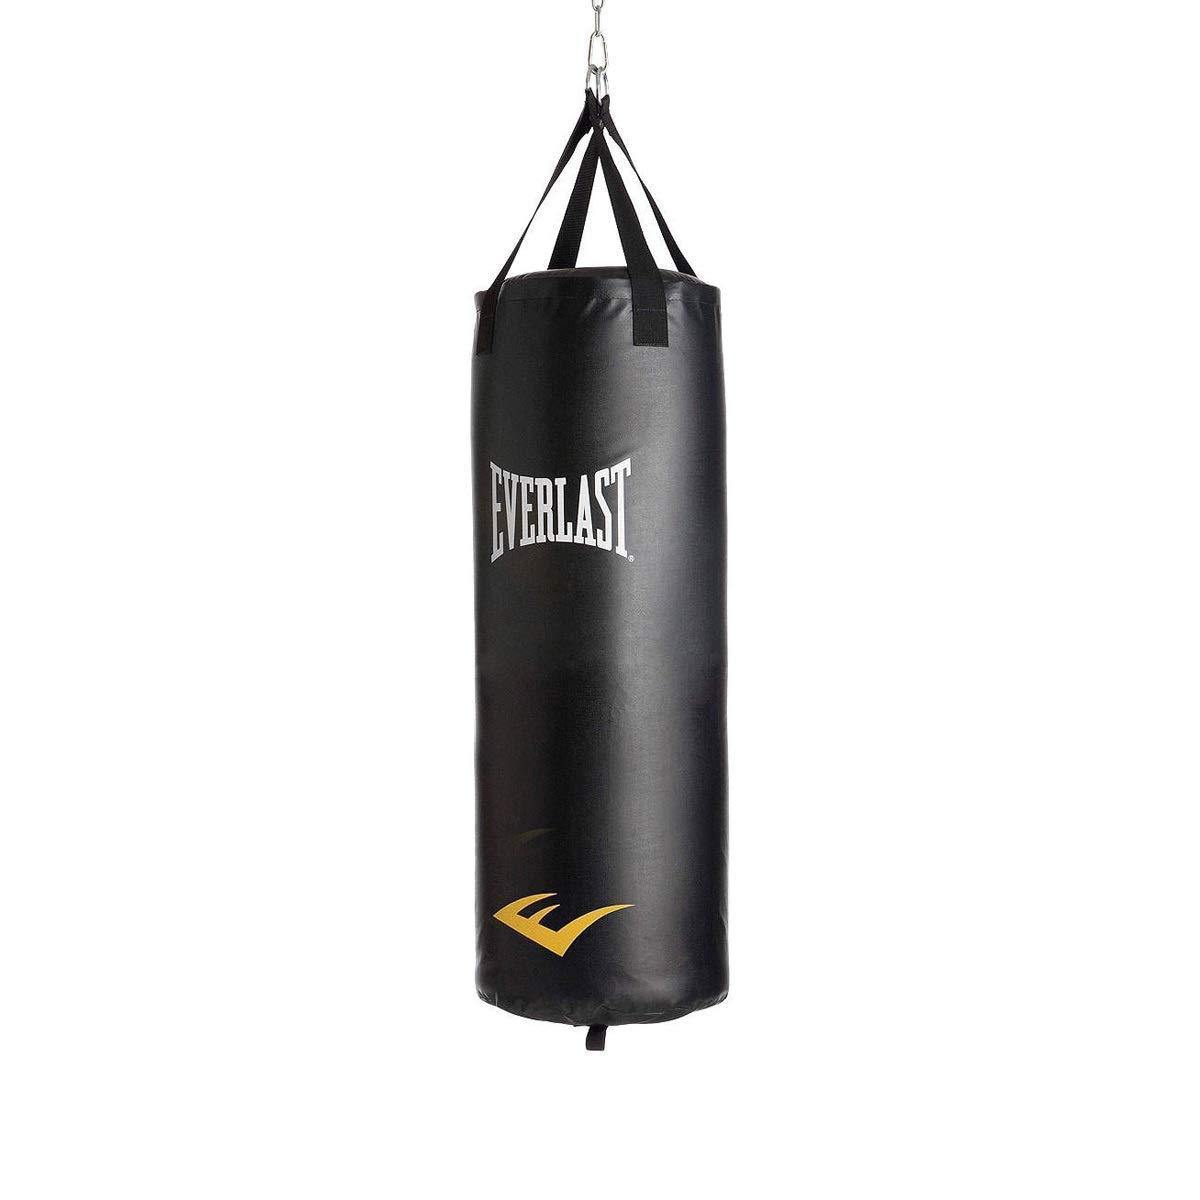 Everlast Nevatear Punching Bag, 60 LBS (13" x 34") - Best Price online Prokicksports.com